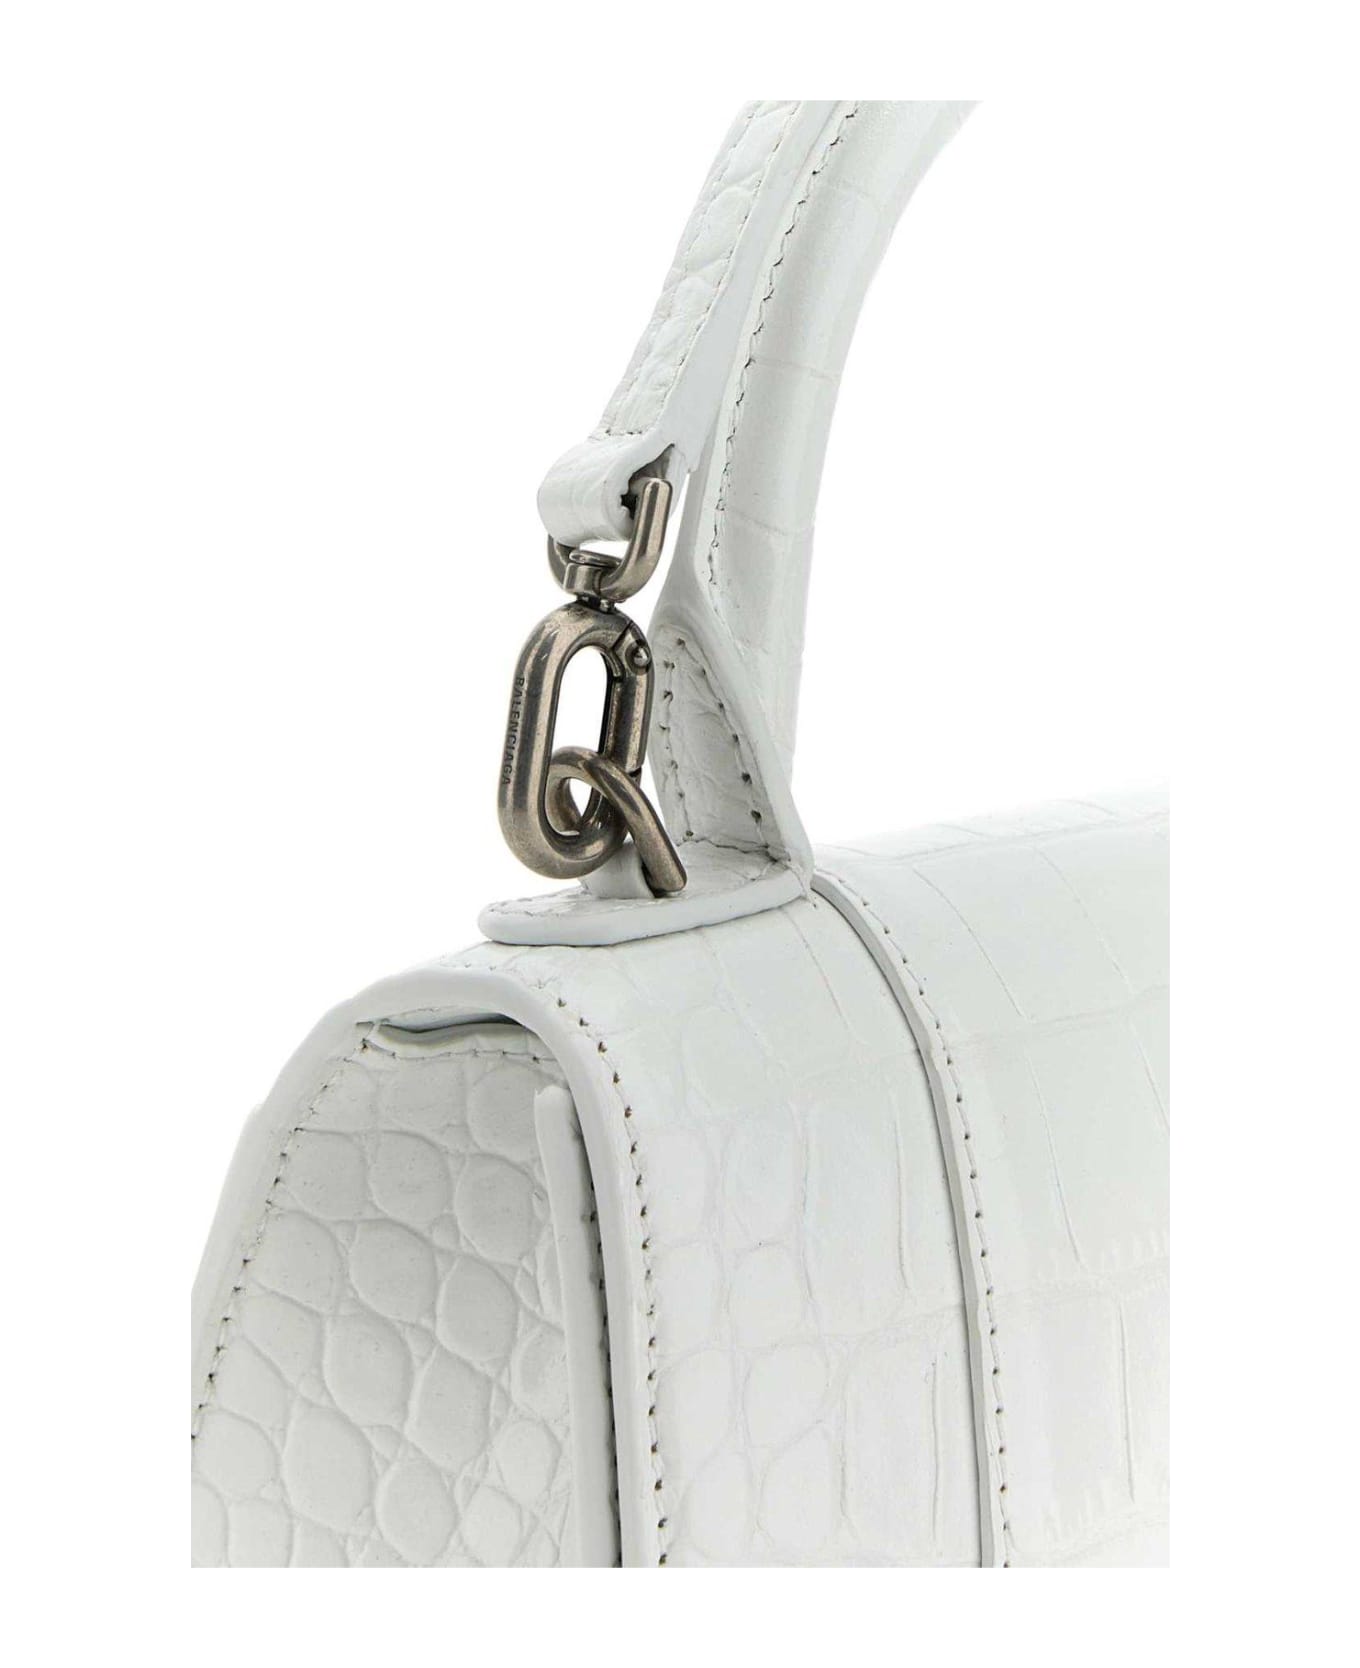 Balenciaga Hourglass Xs Top Handle Bag - White